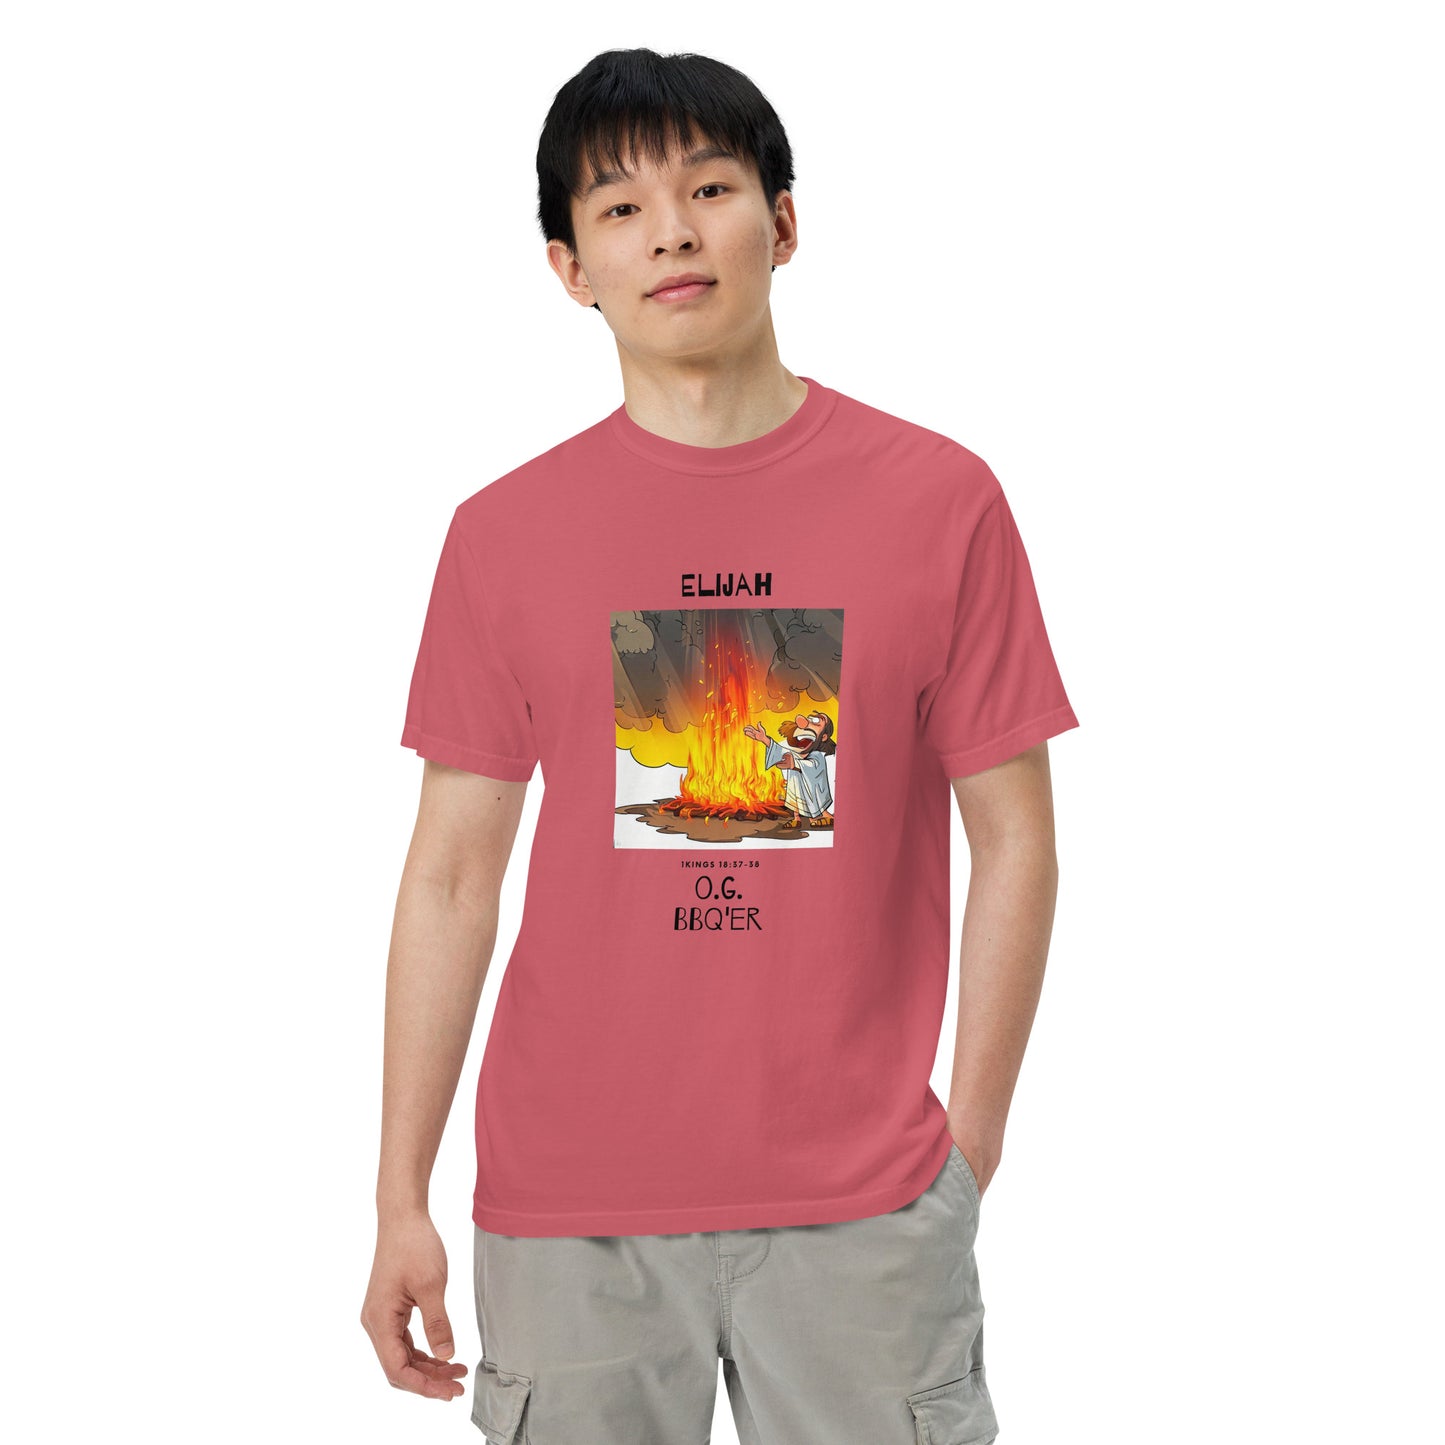 Elijah O.G. BBQ'er (Black Print) Men’s Comfort Colors T-Shirt